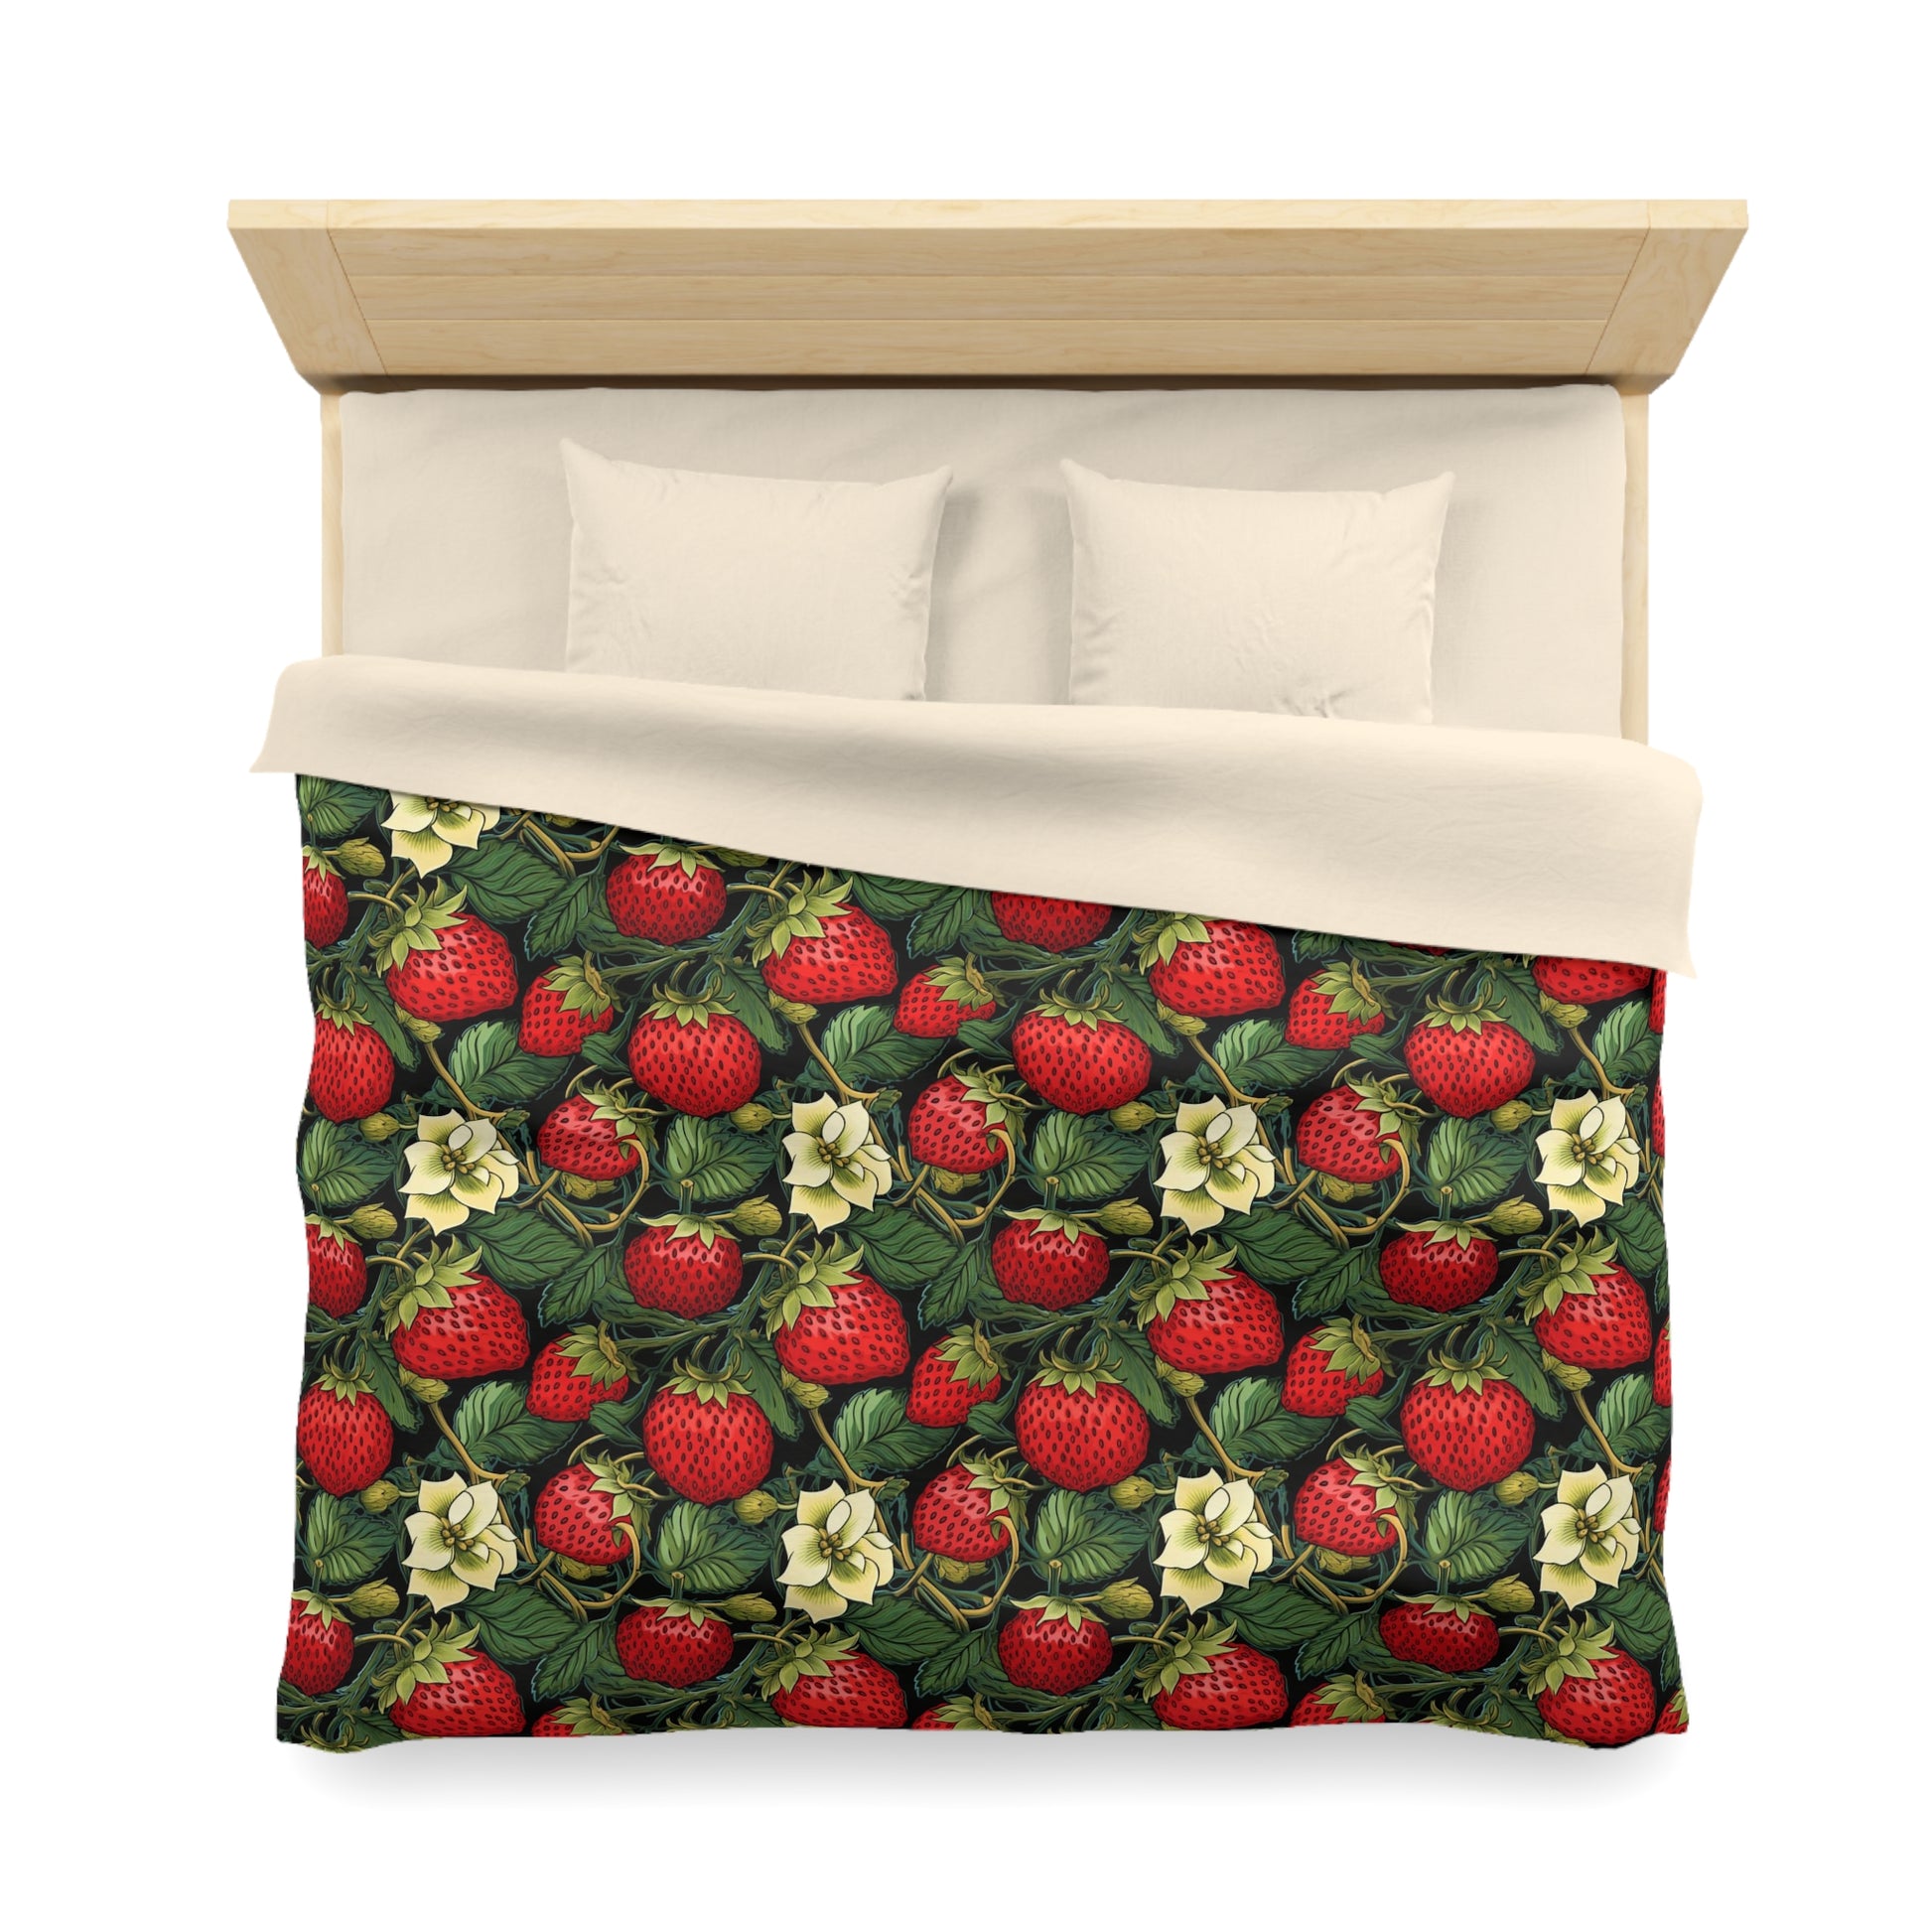 Strawberry Duvet Cover, Retro Vintage Bedding Queen King Full Twin XL Microfiber Unique Designer Bed Quilt Bedroom Decor Starcove Fashion